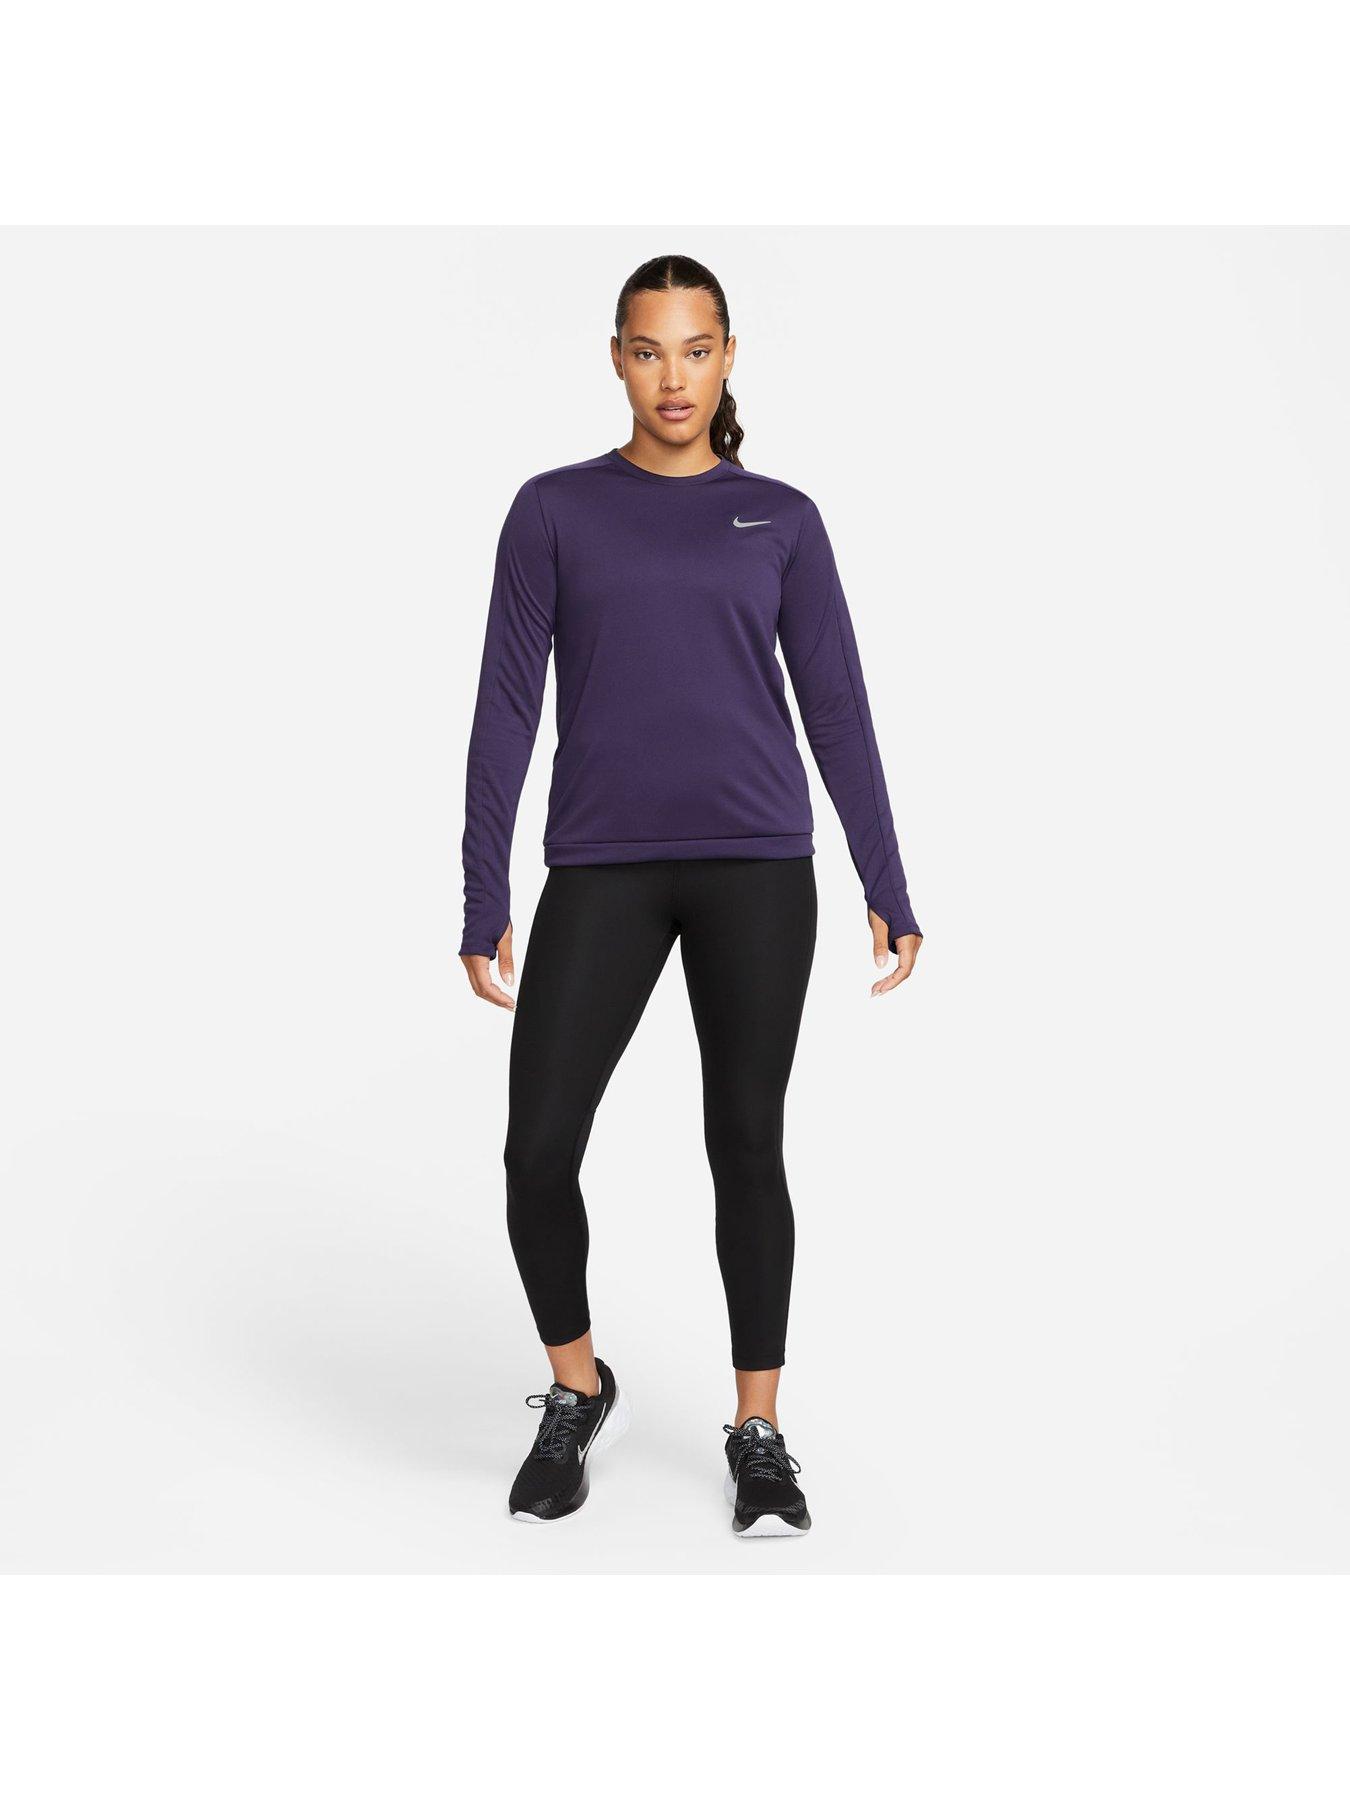 Nike Maternity Dri-FIT Performance Womens Tank Tops Size S, Color: Black/ Black at  Women's Clothing store